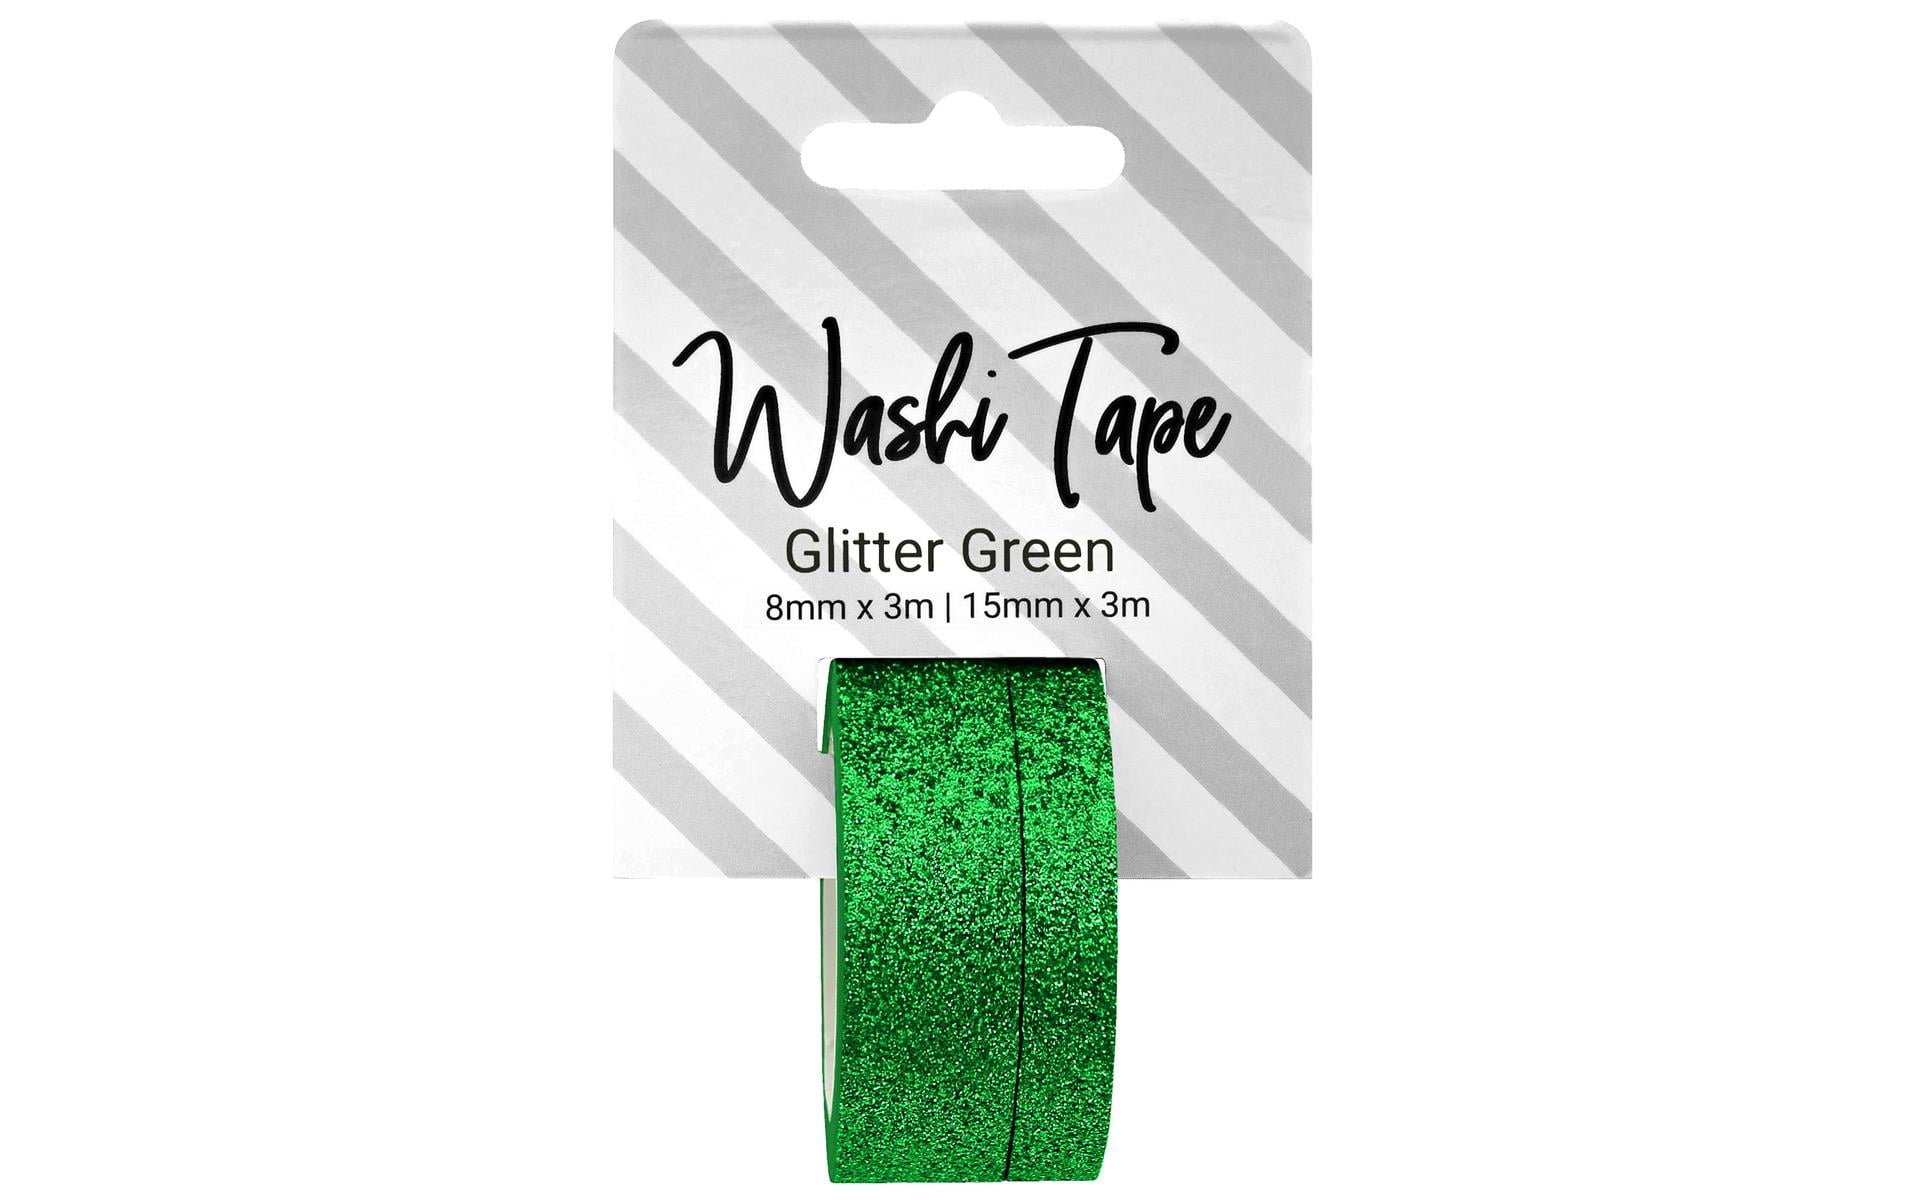 Neon Green Washi Tape - 15mm x 10m - Fluorescent - Scrapbooking